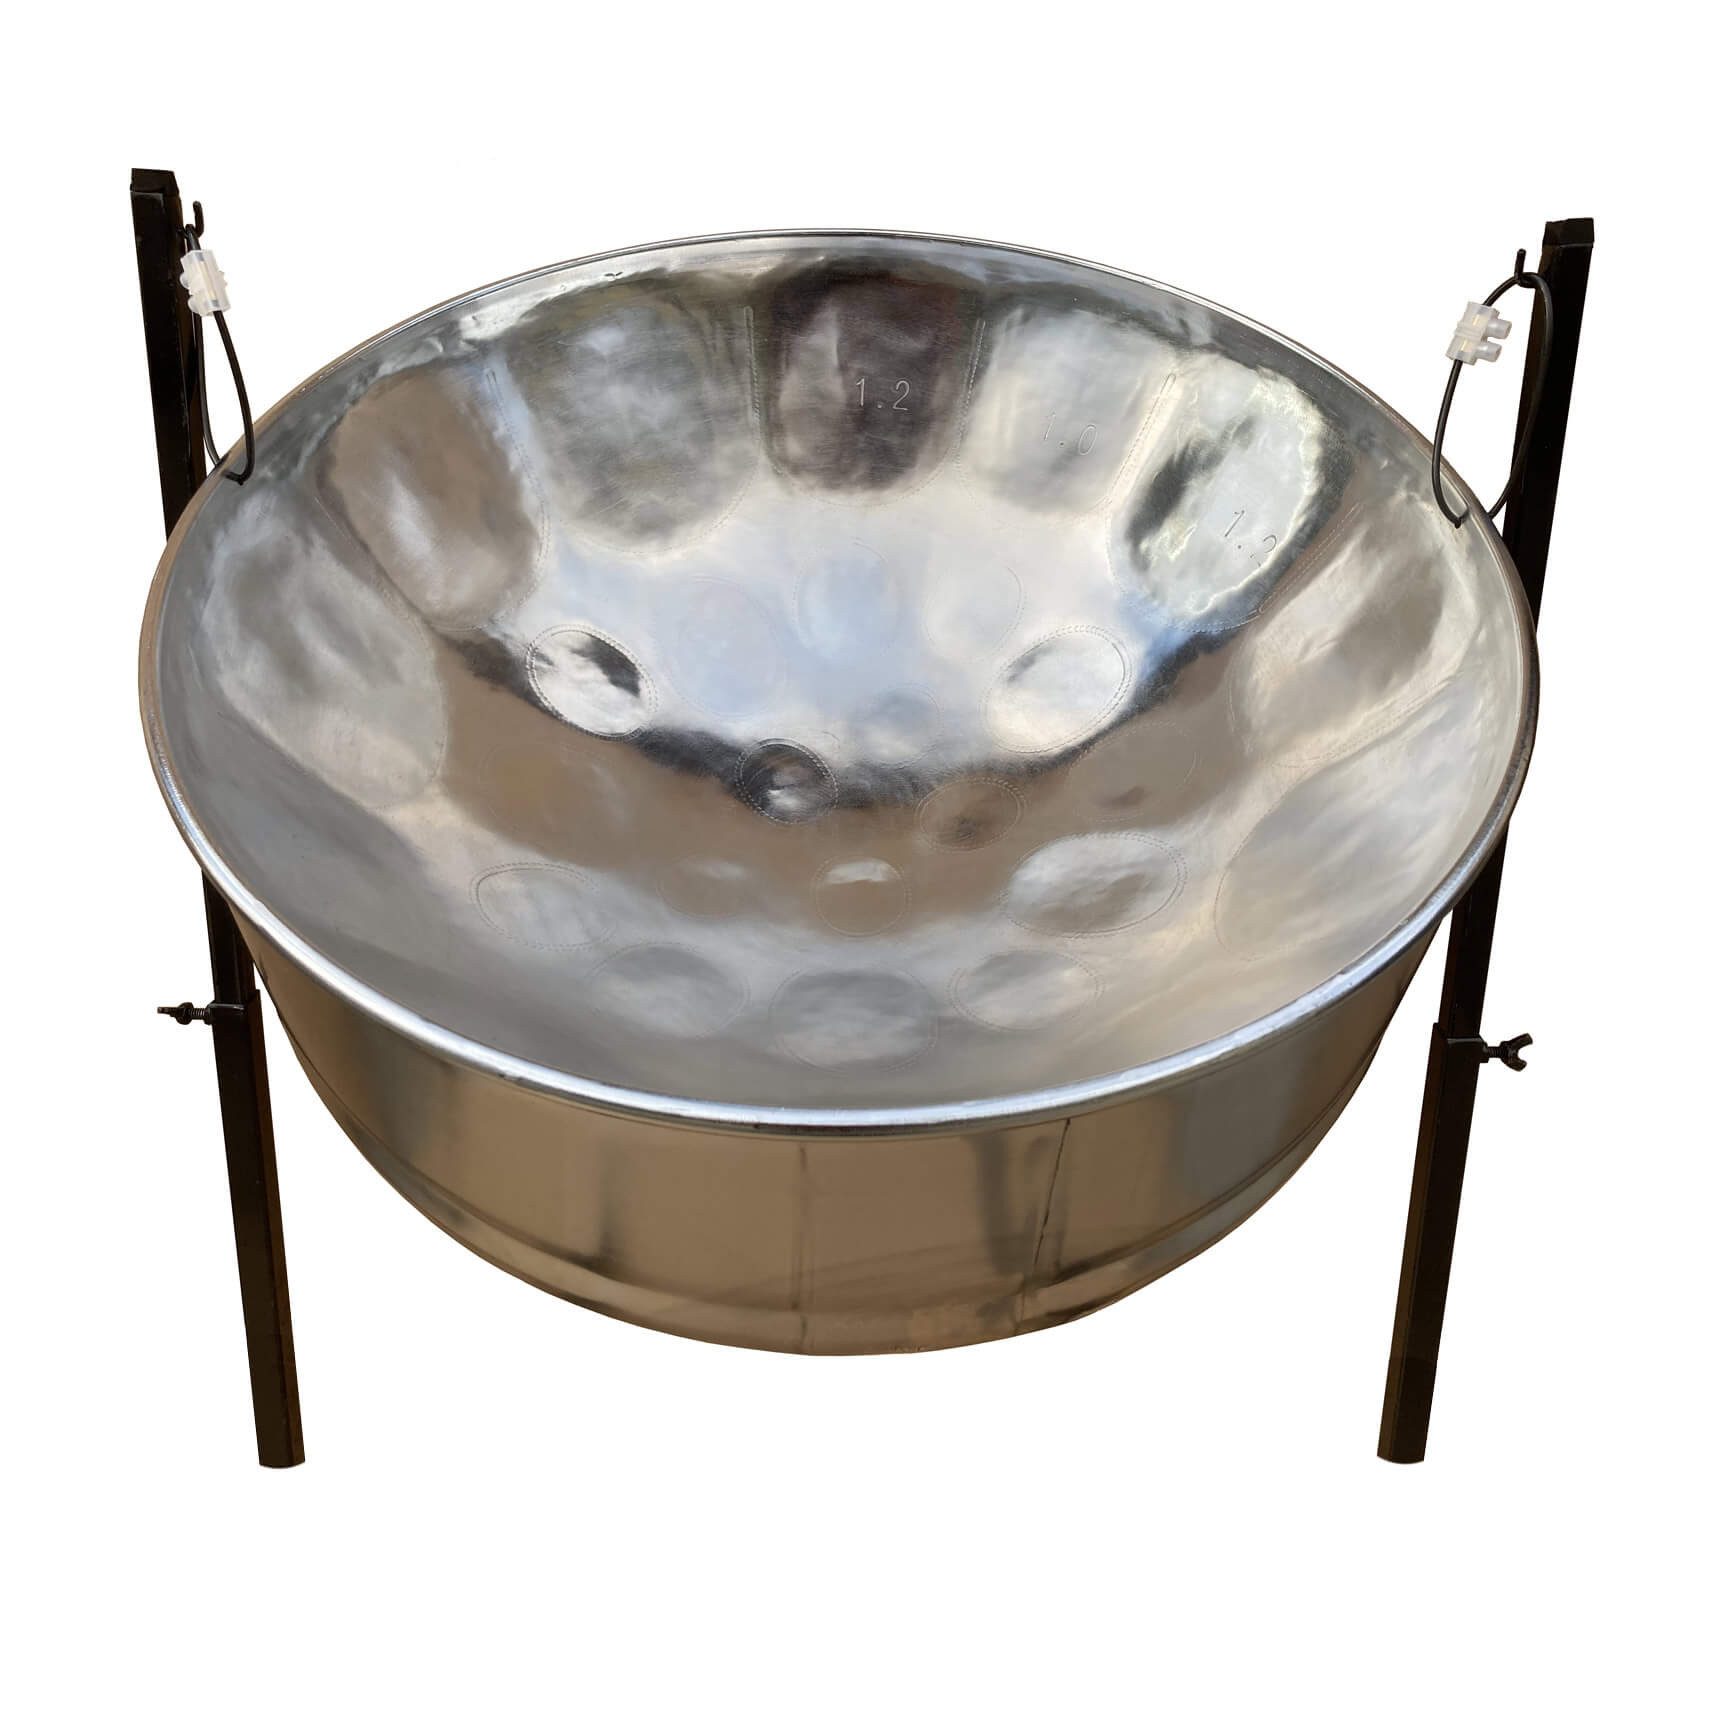 Steel drum